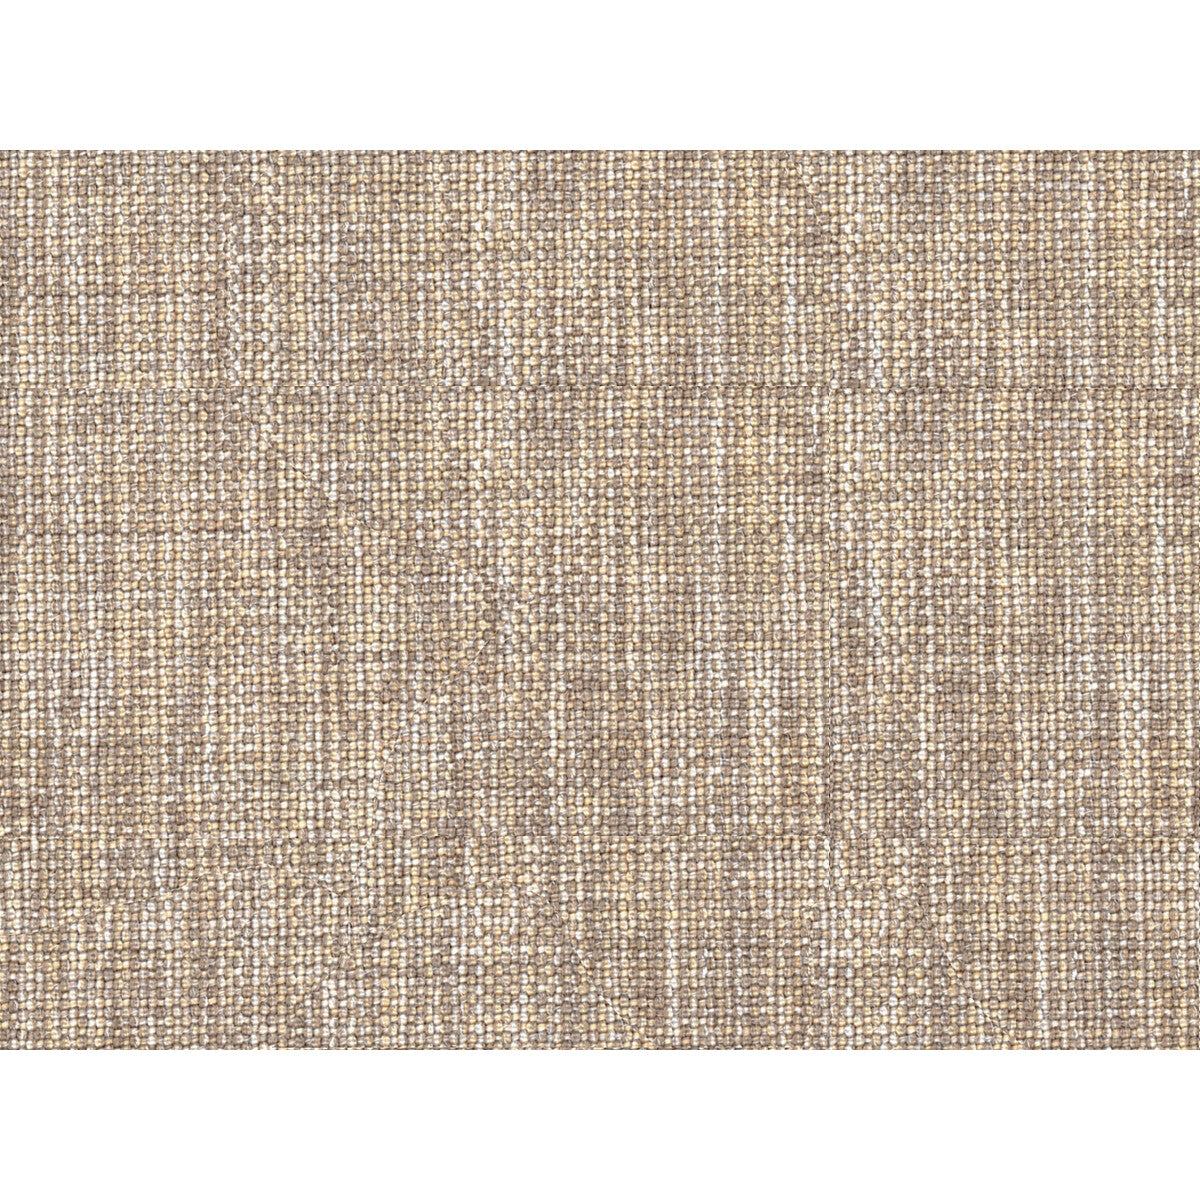 Kravet Smart fabric in 32959-16 color - pattern 32959.16.0 - by Kravet Smart